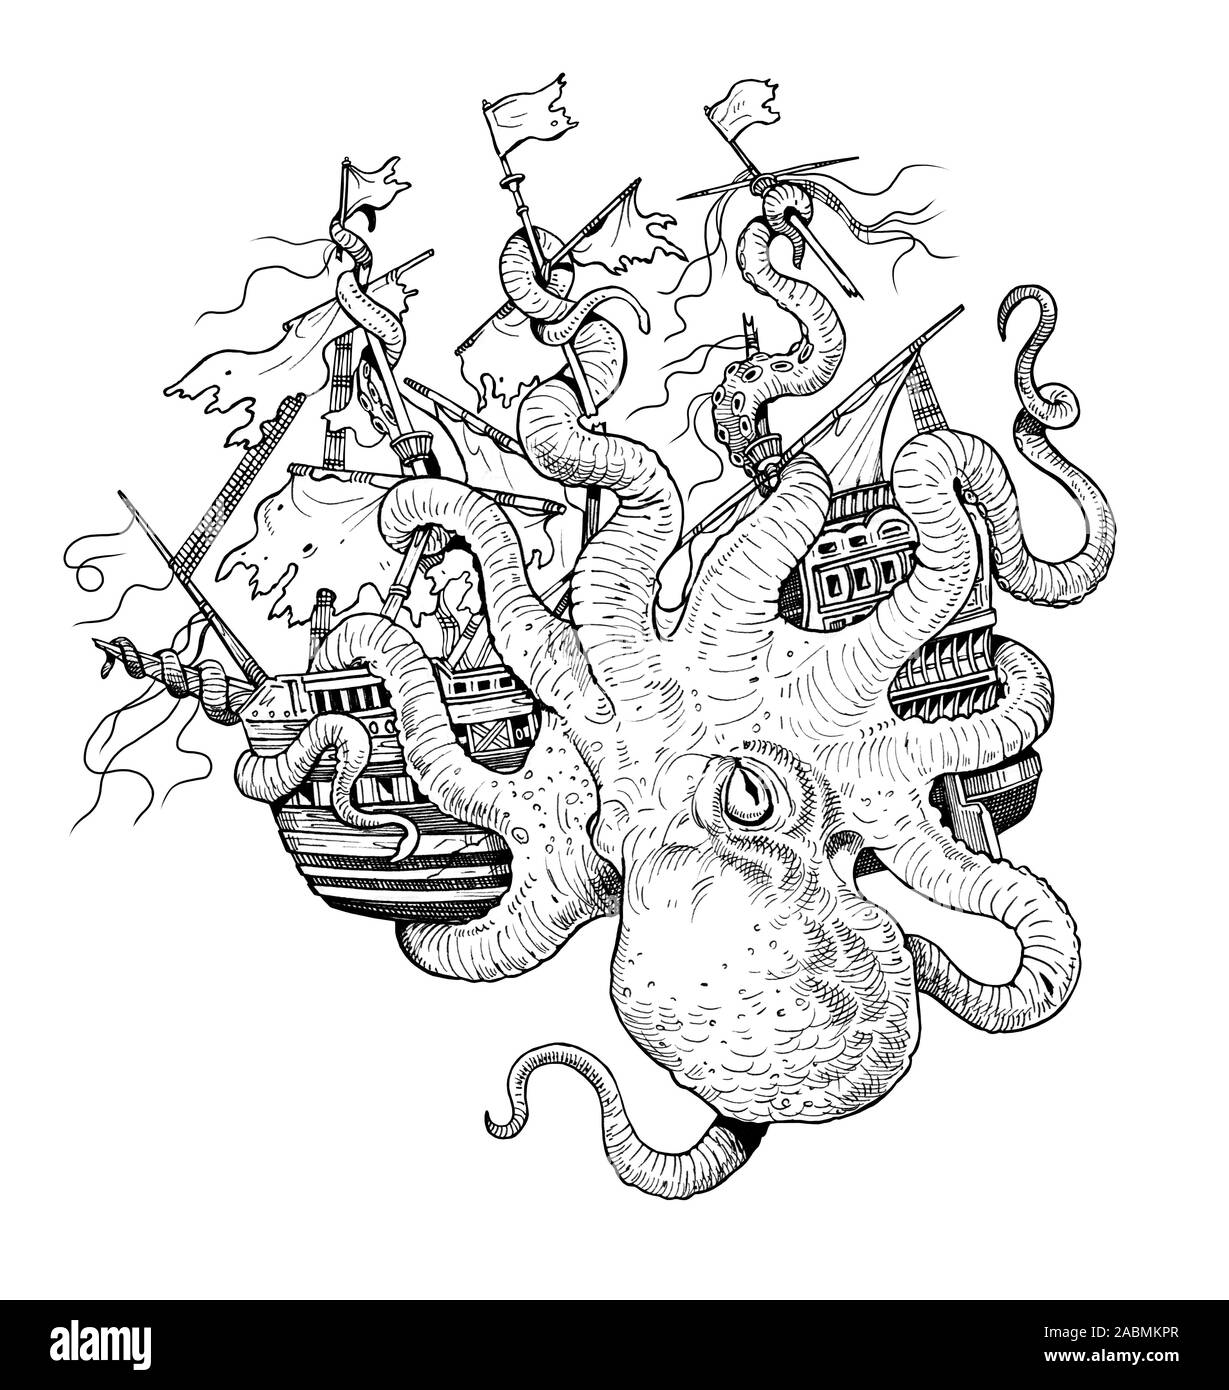 Giant octopus attacks ship. Gigantic mollusk against pirates. Fantasy drawing. Stock Photo